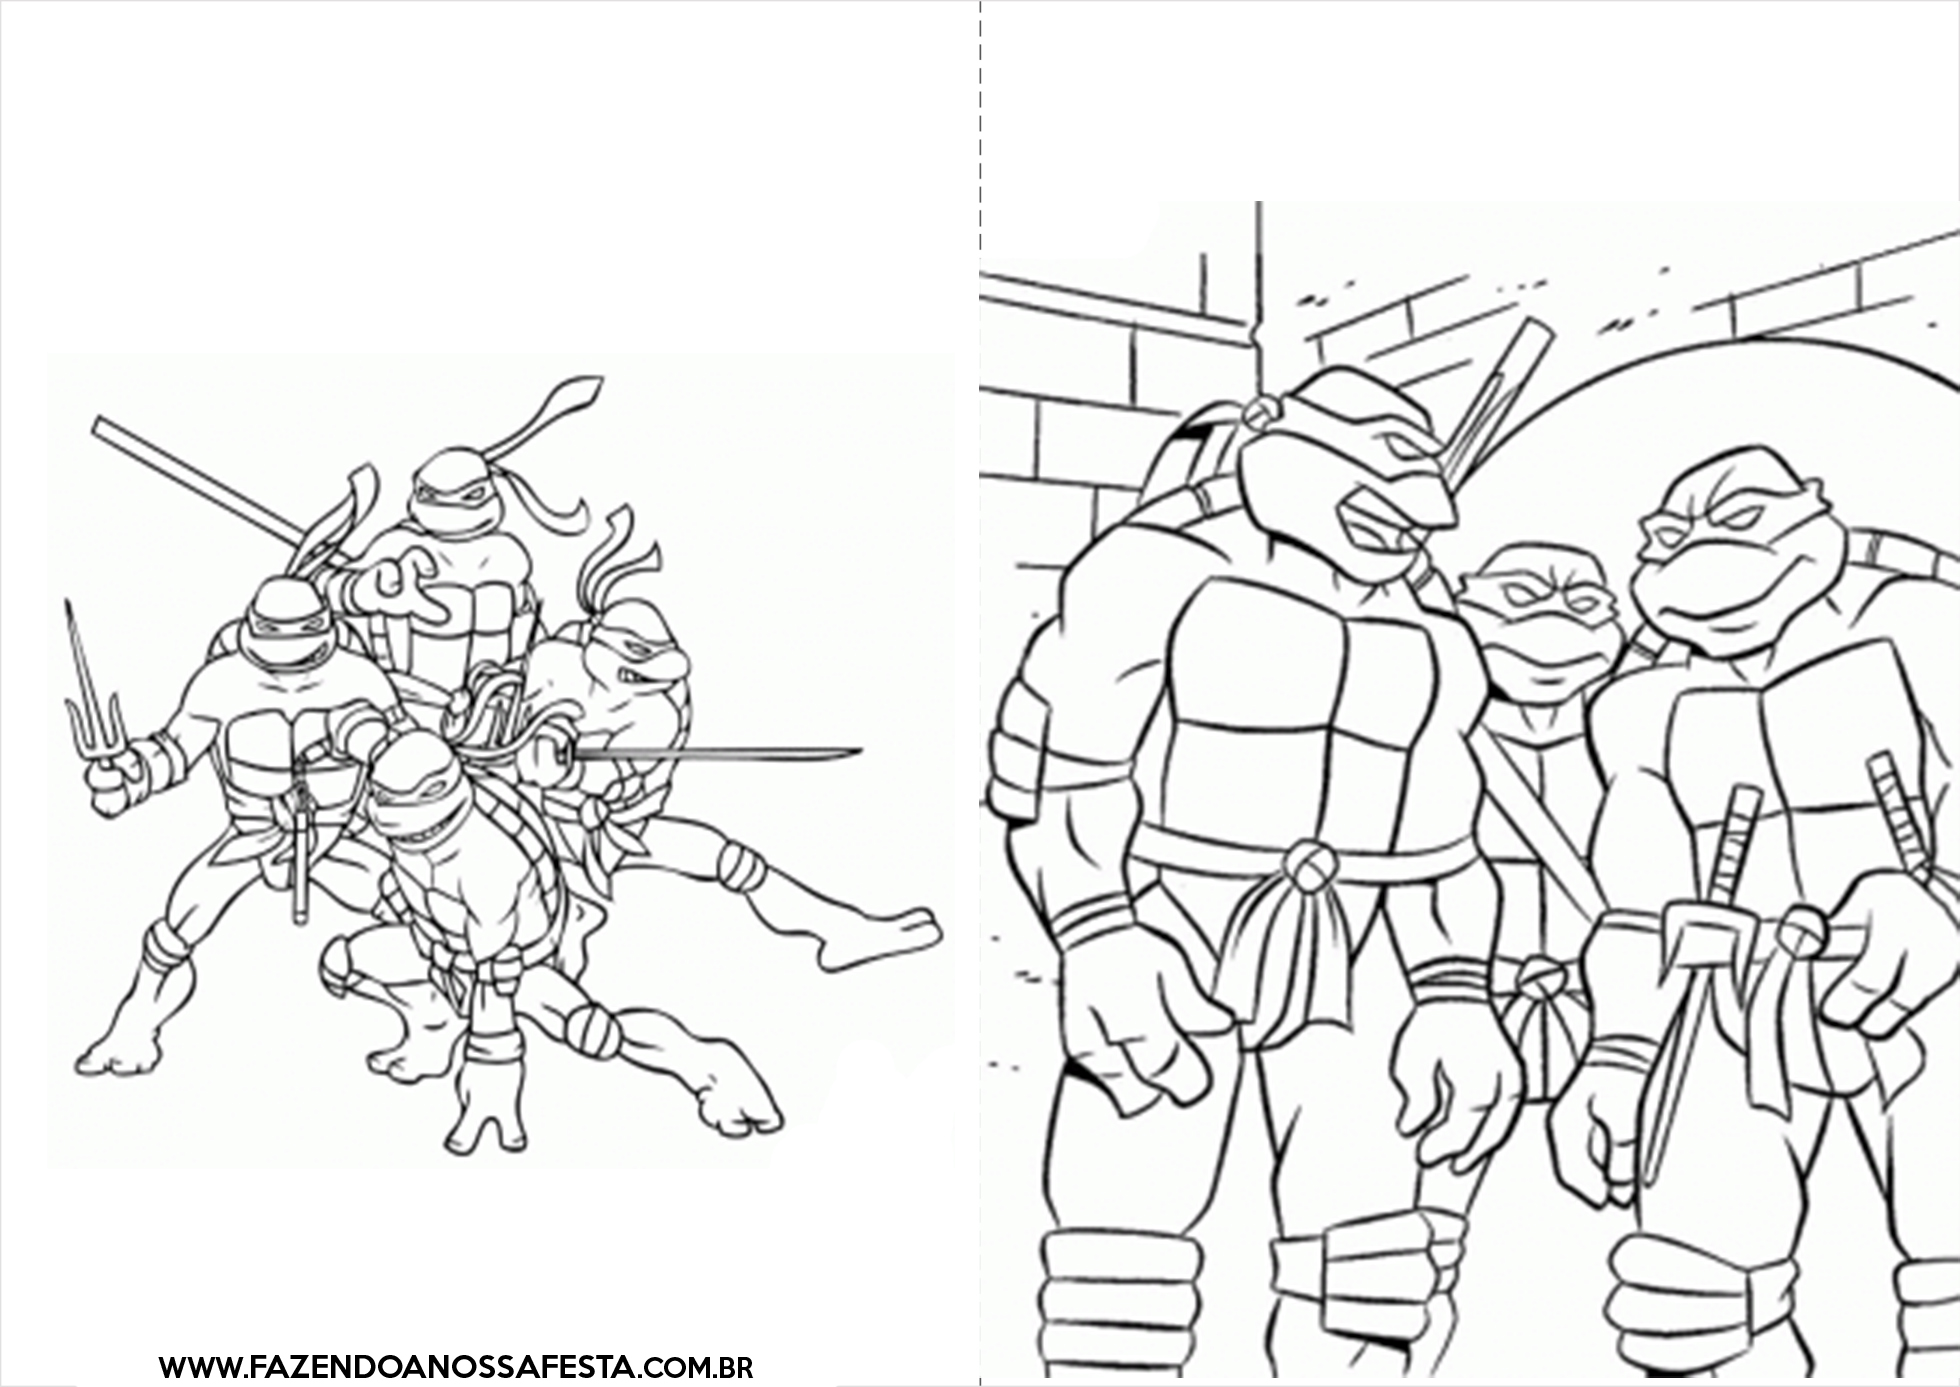 Tartarugas ninjas imagem para imprimir e colorir - Tartarugas